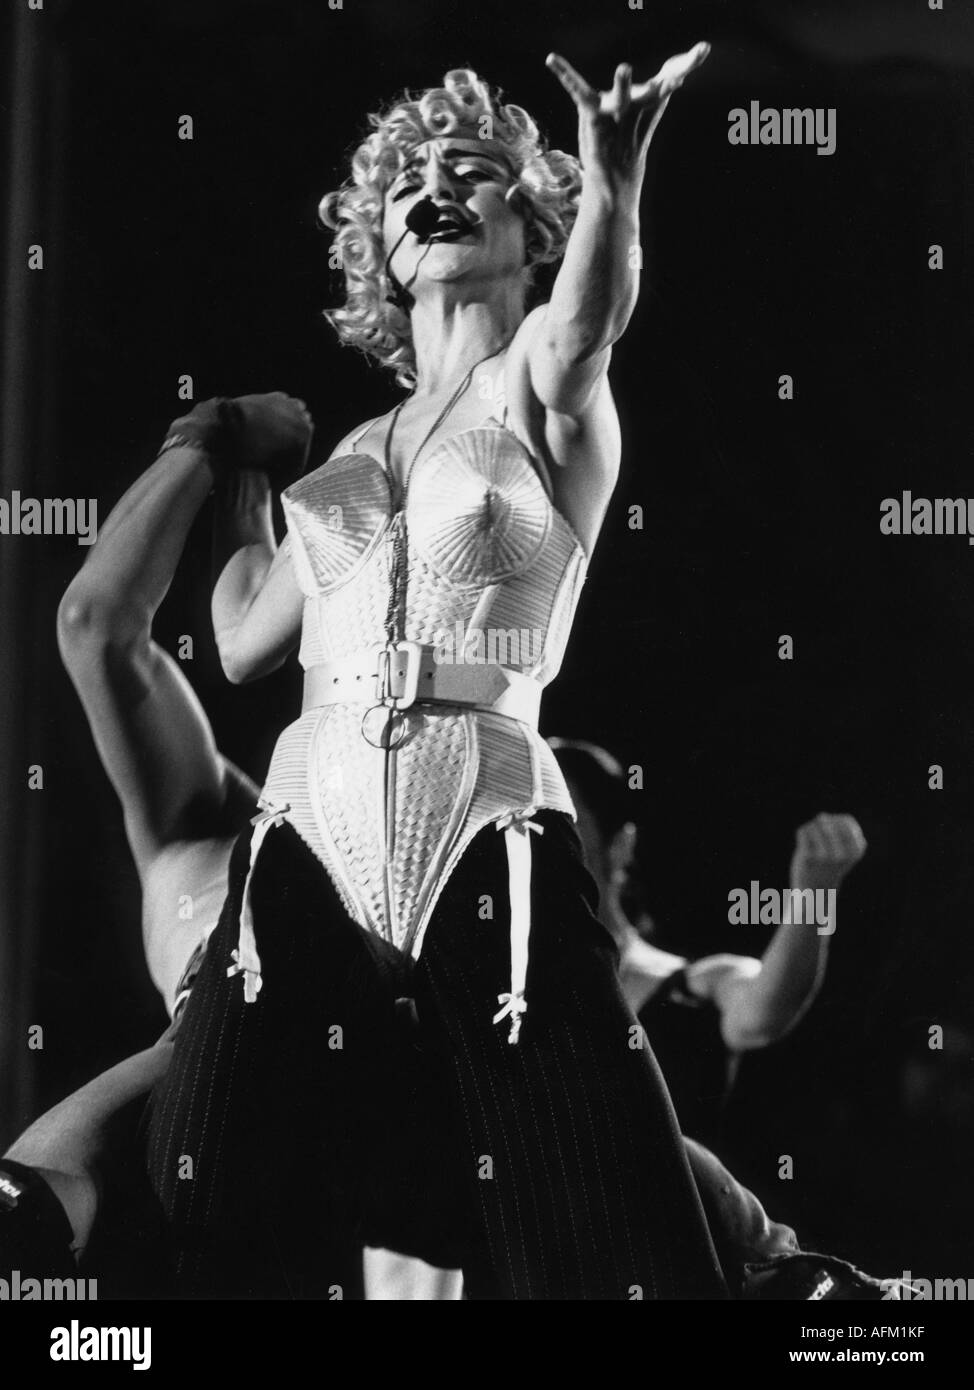 Madonna, * 16.6.1958, US musician / artist, singer, gig, Reitstadion Riem, near Munich, Germany, 16.7.1990, Stock Photo